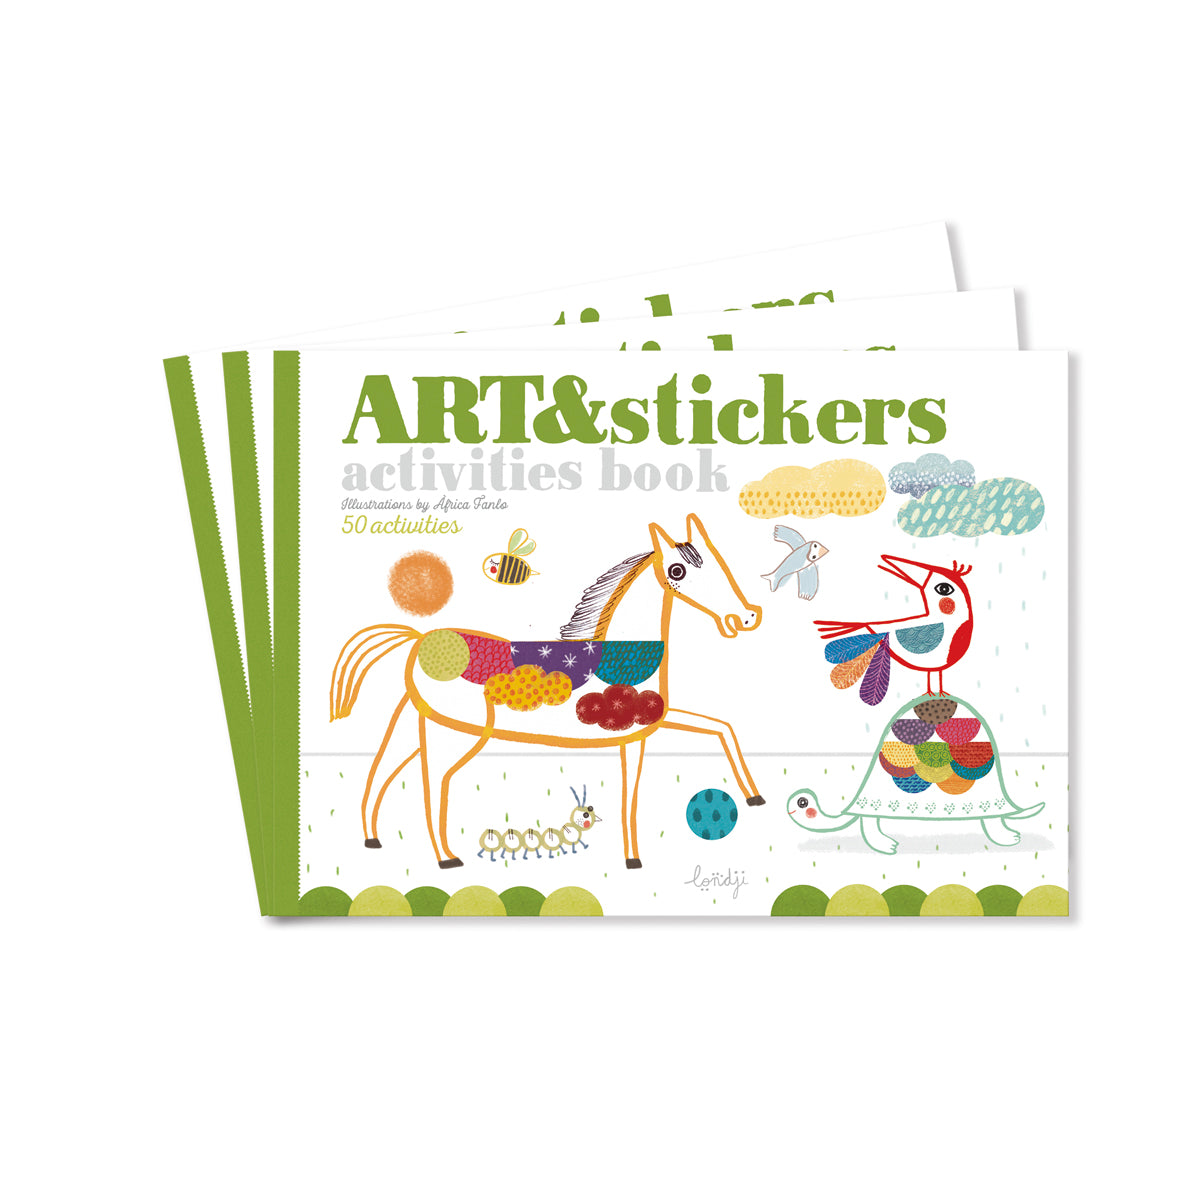 ART&stickers